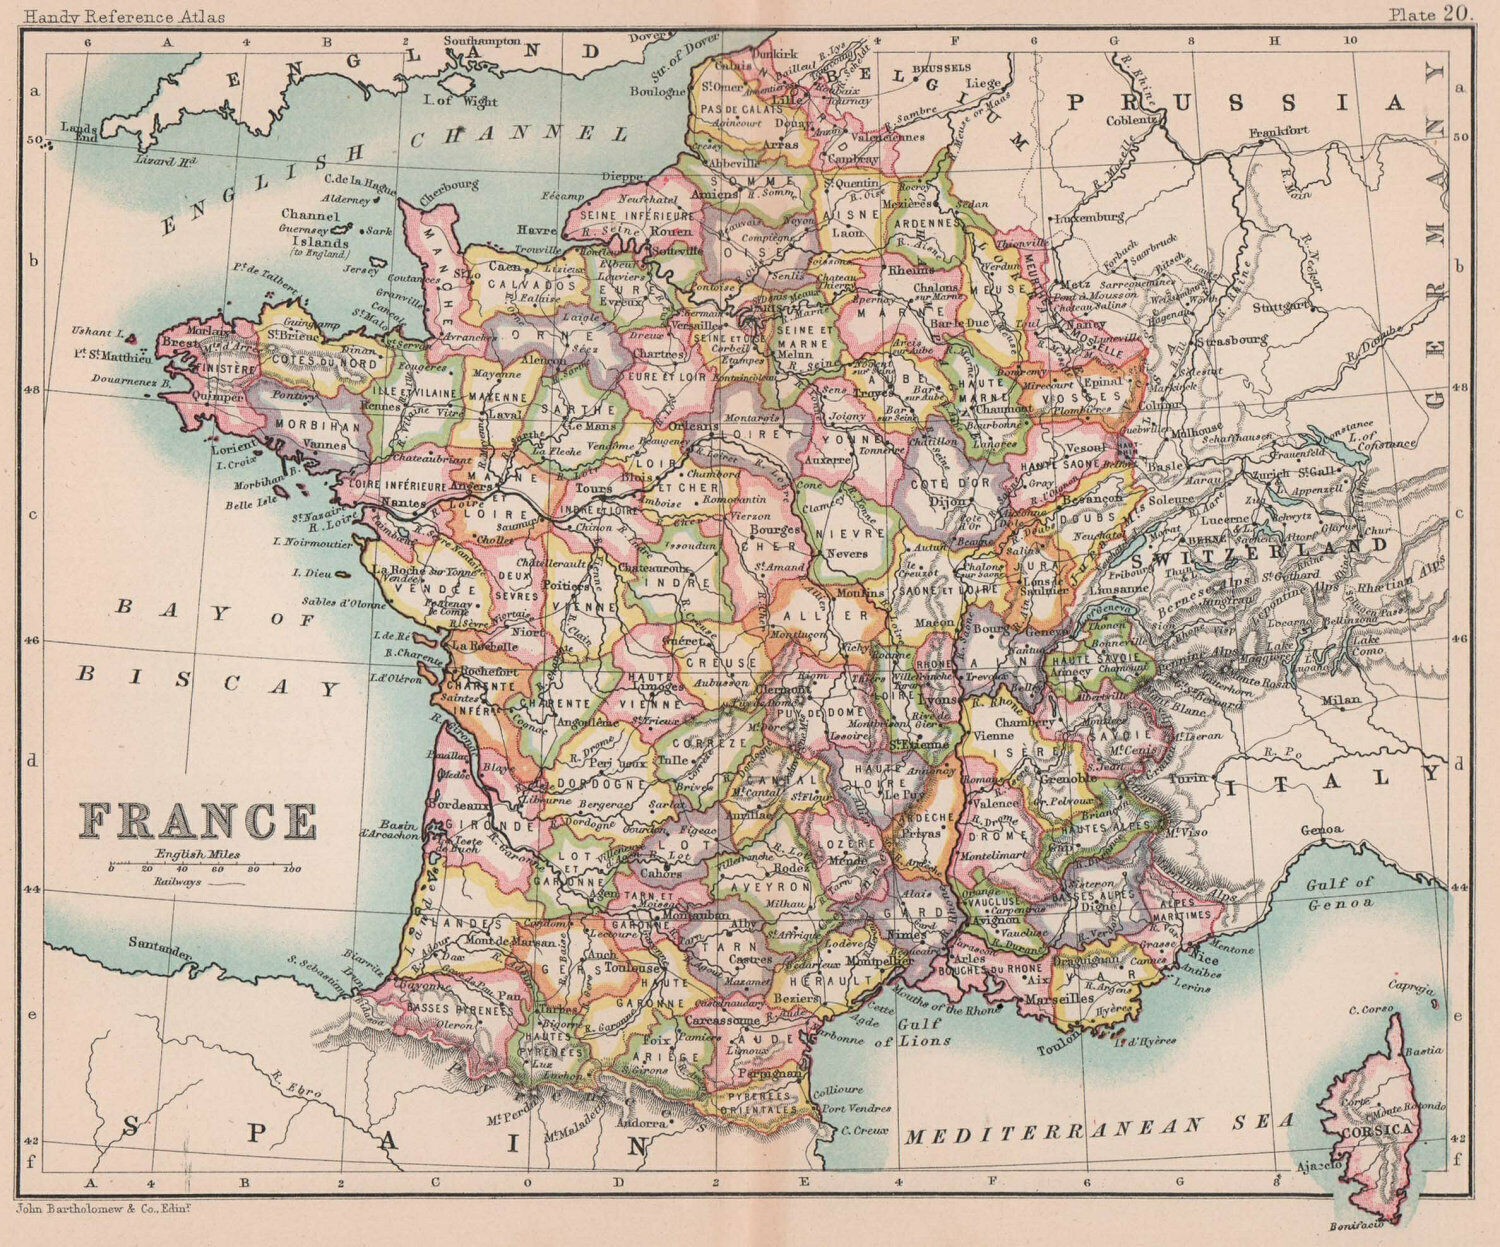 France 送料無料でお届けします in 日本初の departments. BARTHOLOMEW 1893 map old antique vintage